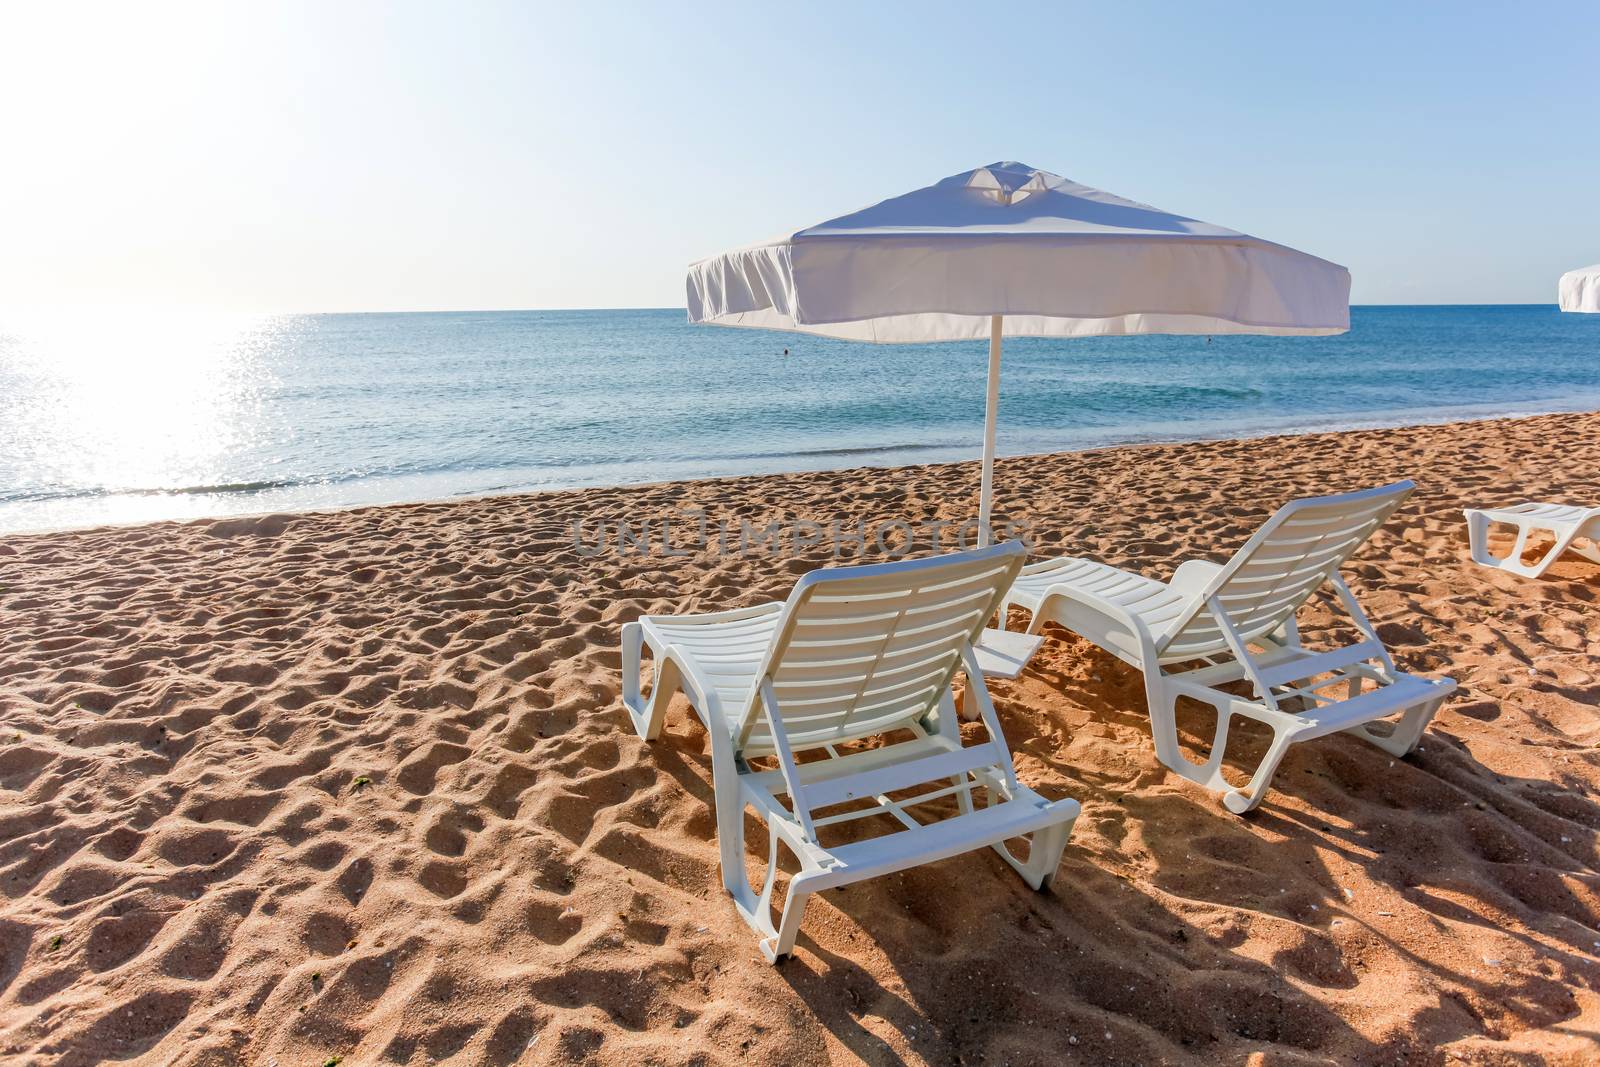 Sunbeds and sun umbrellas on the beach of sea.